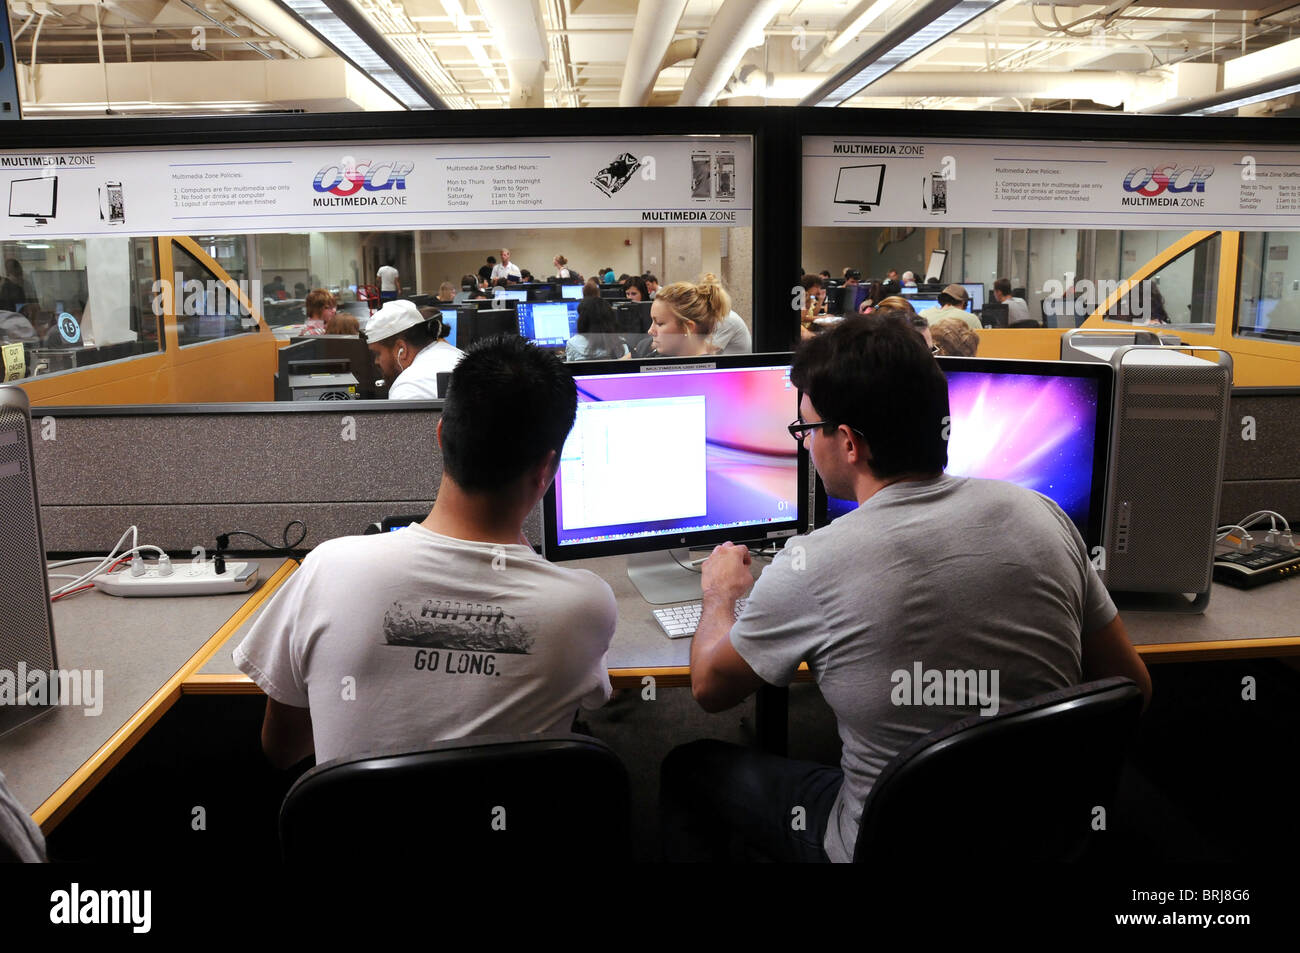 Students work in the Multimedia Zone in the Main Library at the University of Arizona, Tucson, Arizona, USA. Stock Photo